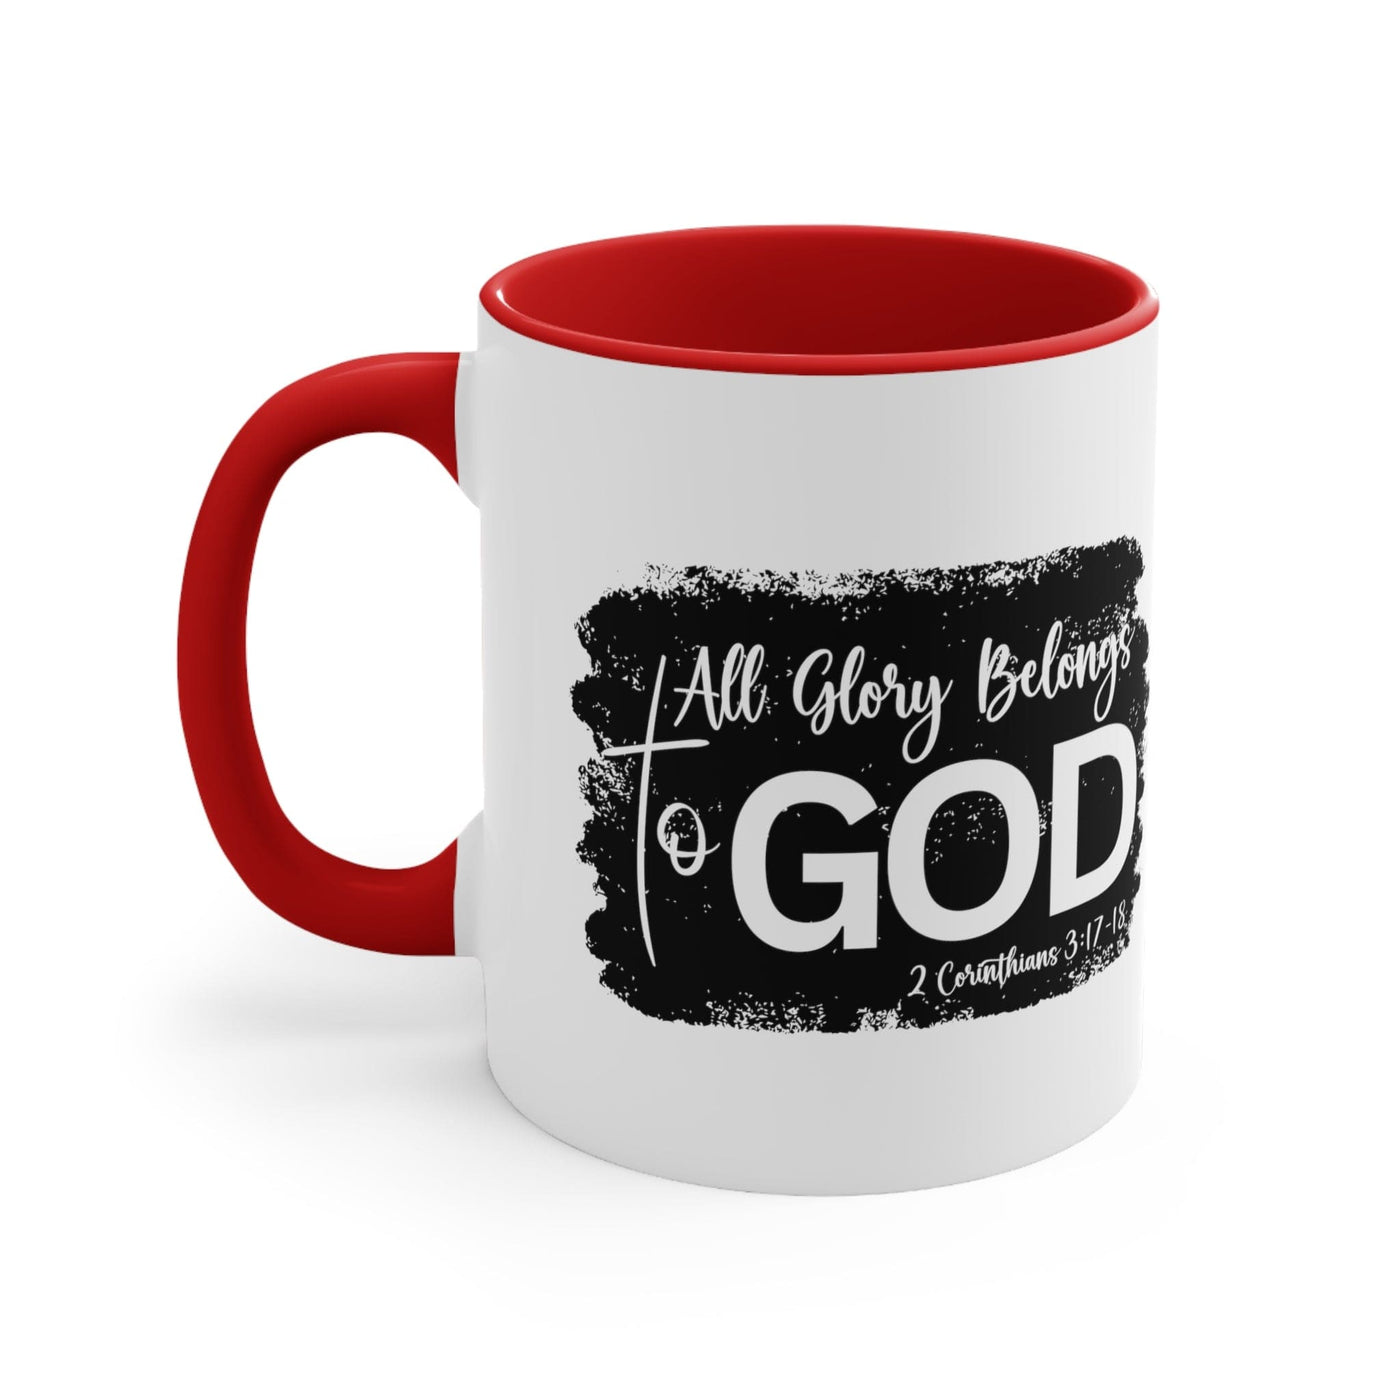 Accent Ceramic Mug 11oz All Glory Belongs To God Christian Illustration Black